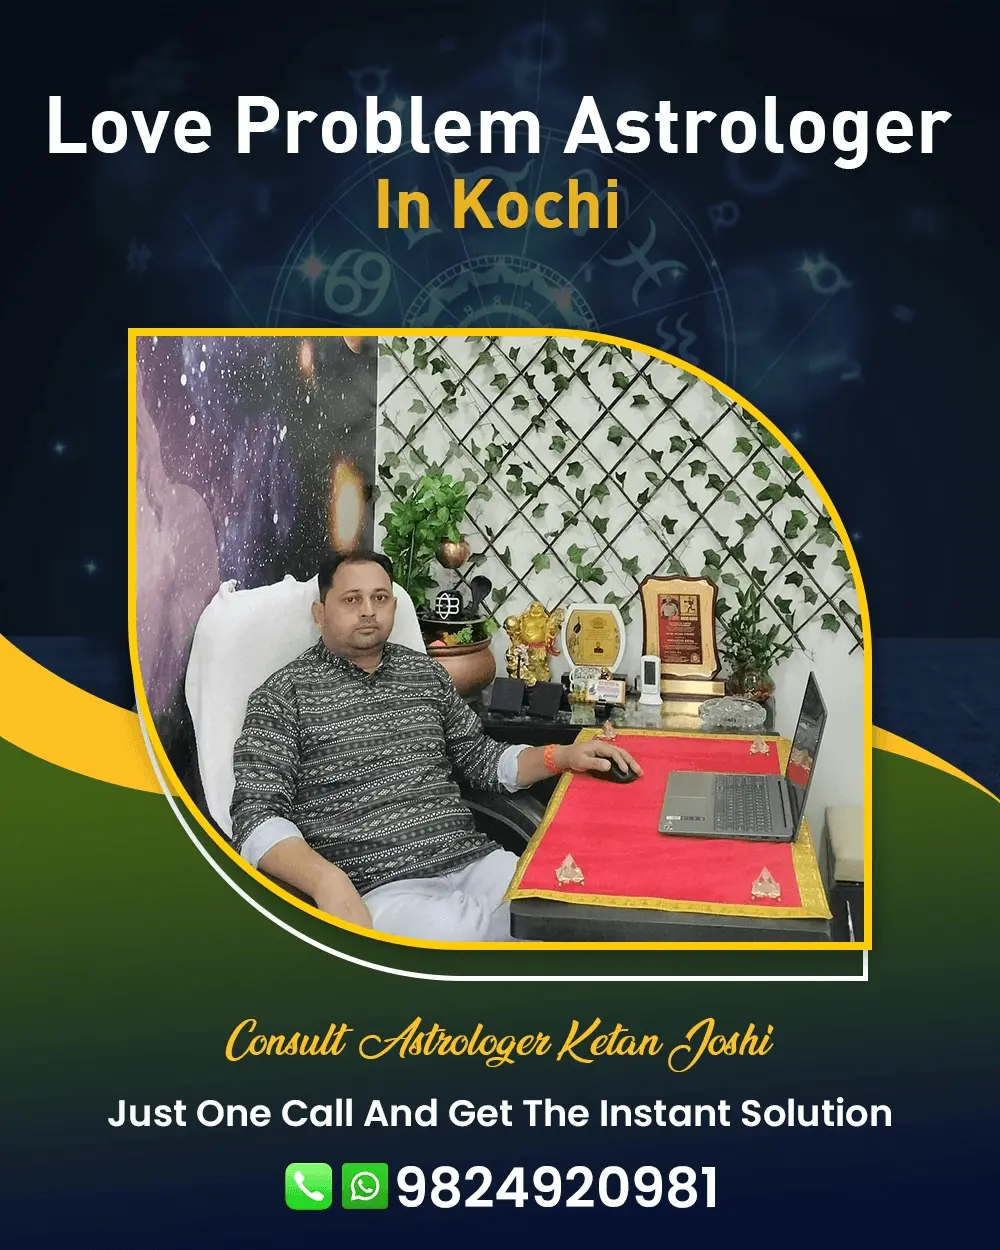 Love Problem Astrologer In Kochi